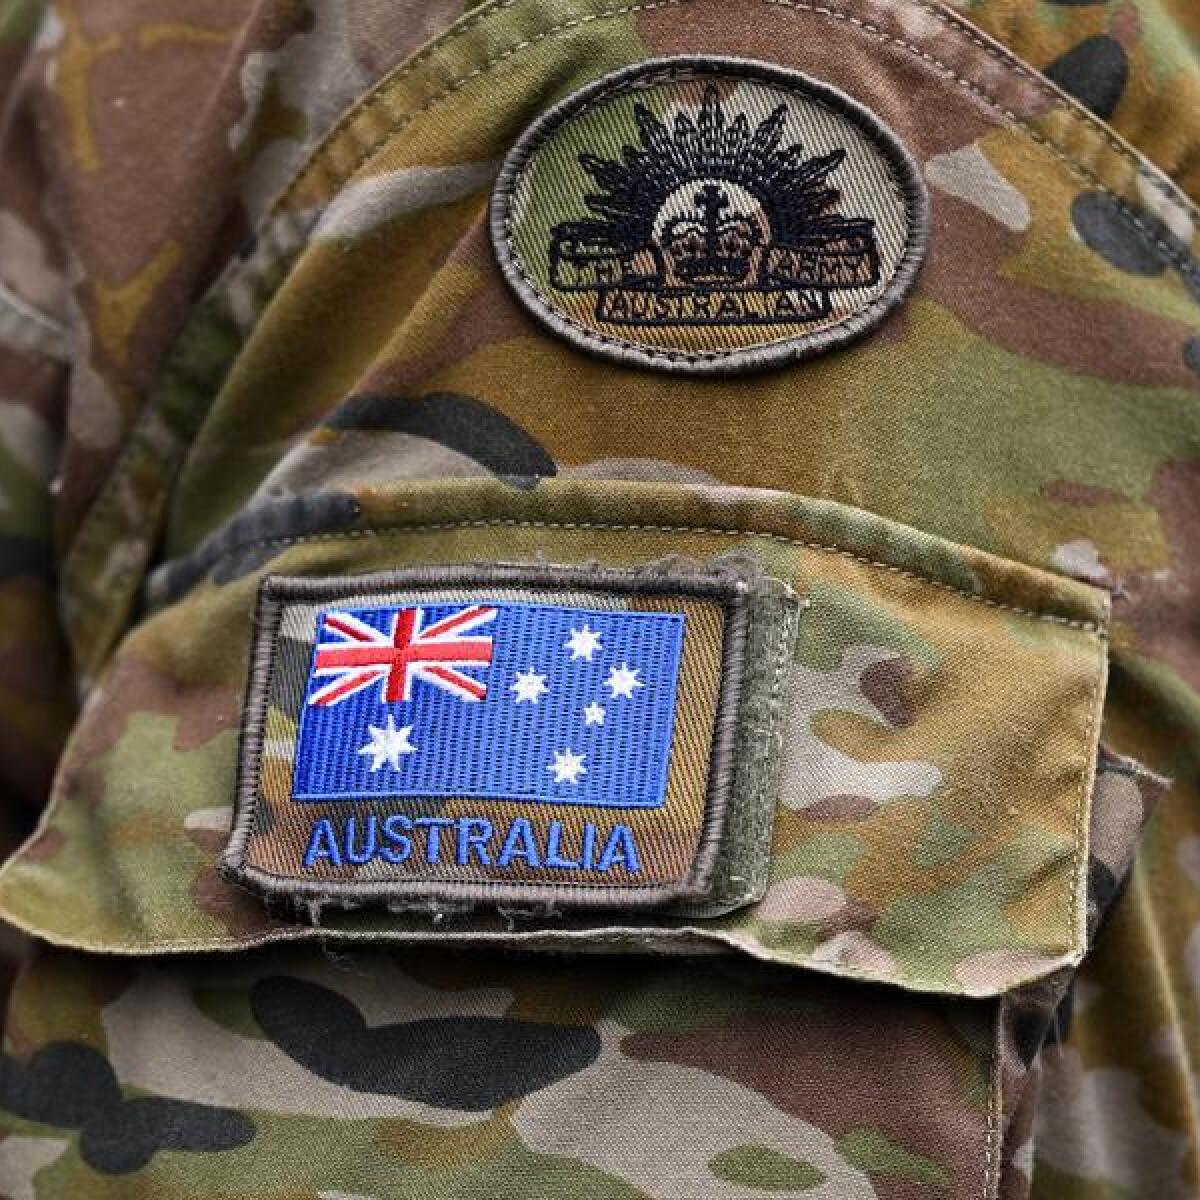 An Australian flag on the uniform of Australian Army personnel